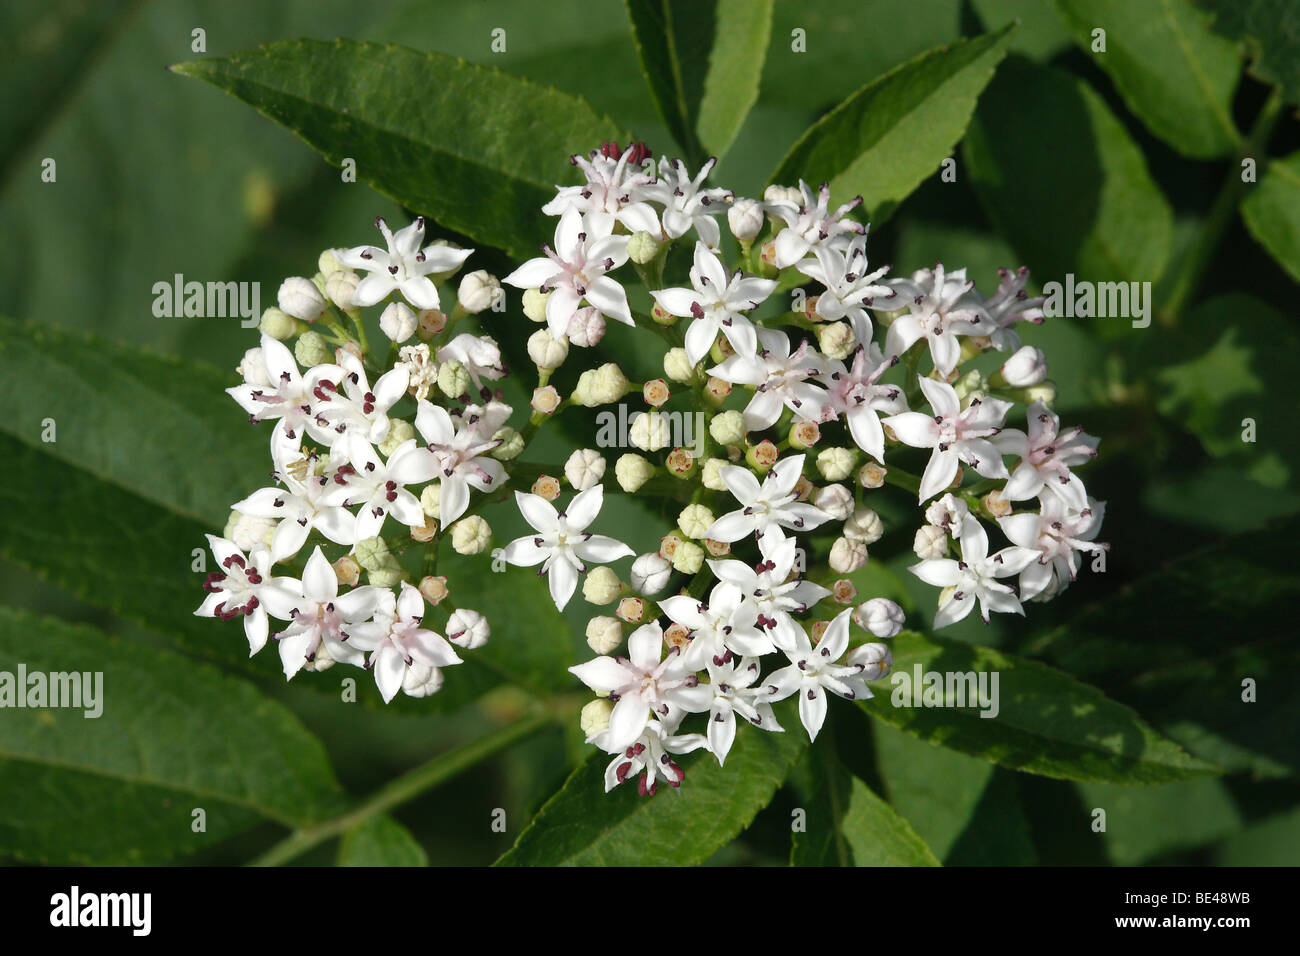 Danewort, Zwerg Holunder, Europäische Zwerg Holunder, Walewort (Sambucus Ebulus), Blumen. Stockfoto